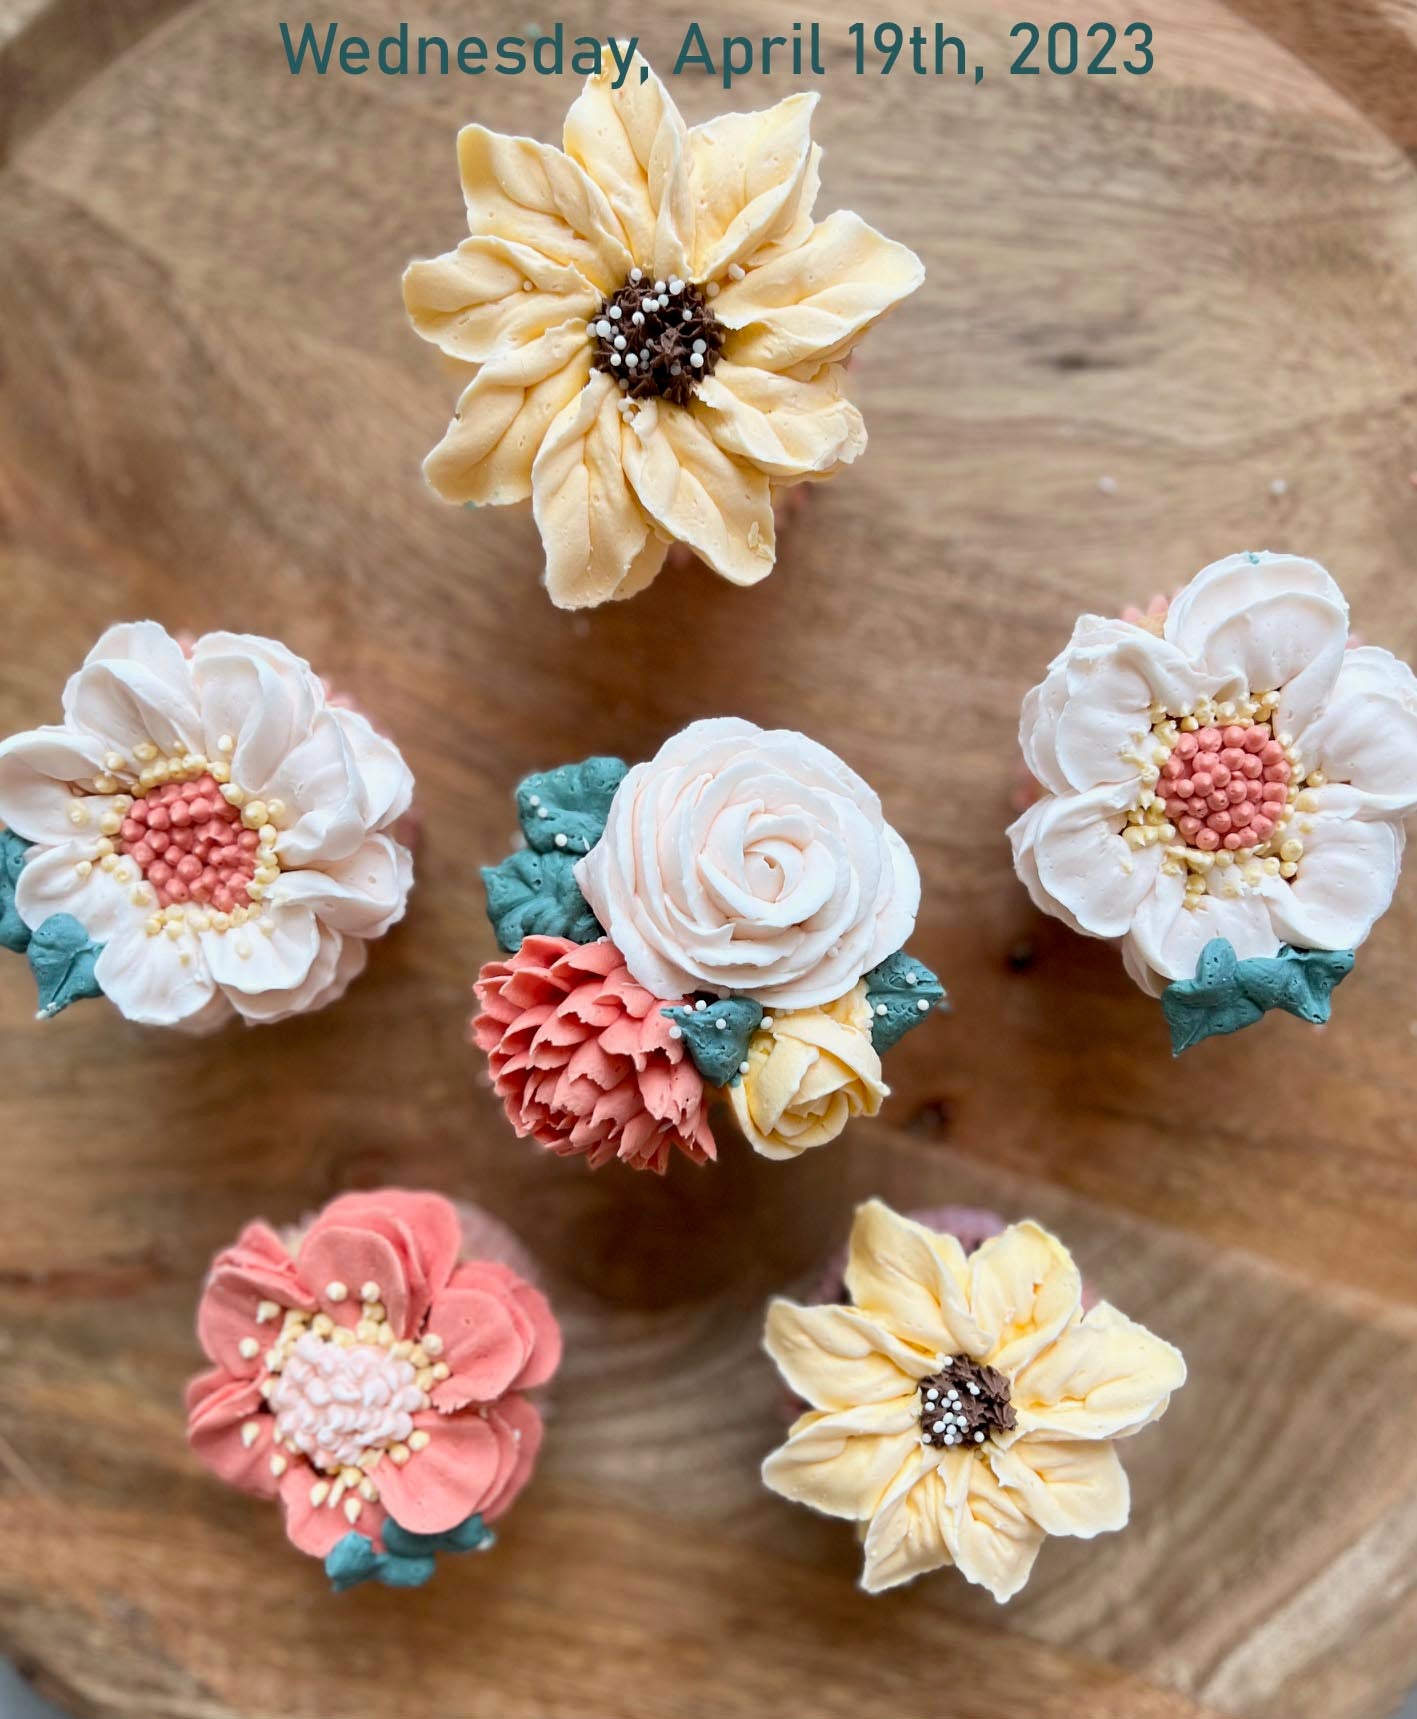 Wednesday 4/19/2023: Cupcake Decorating Class